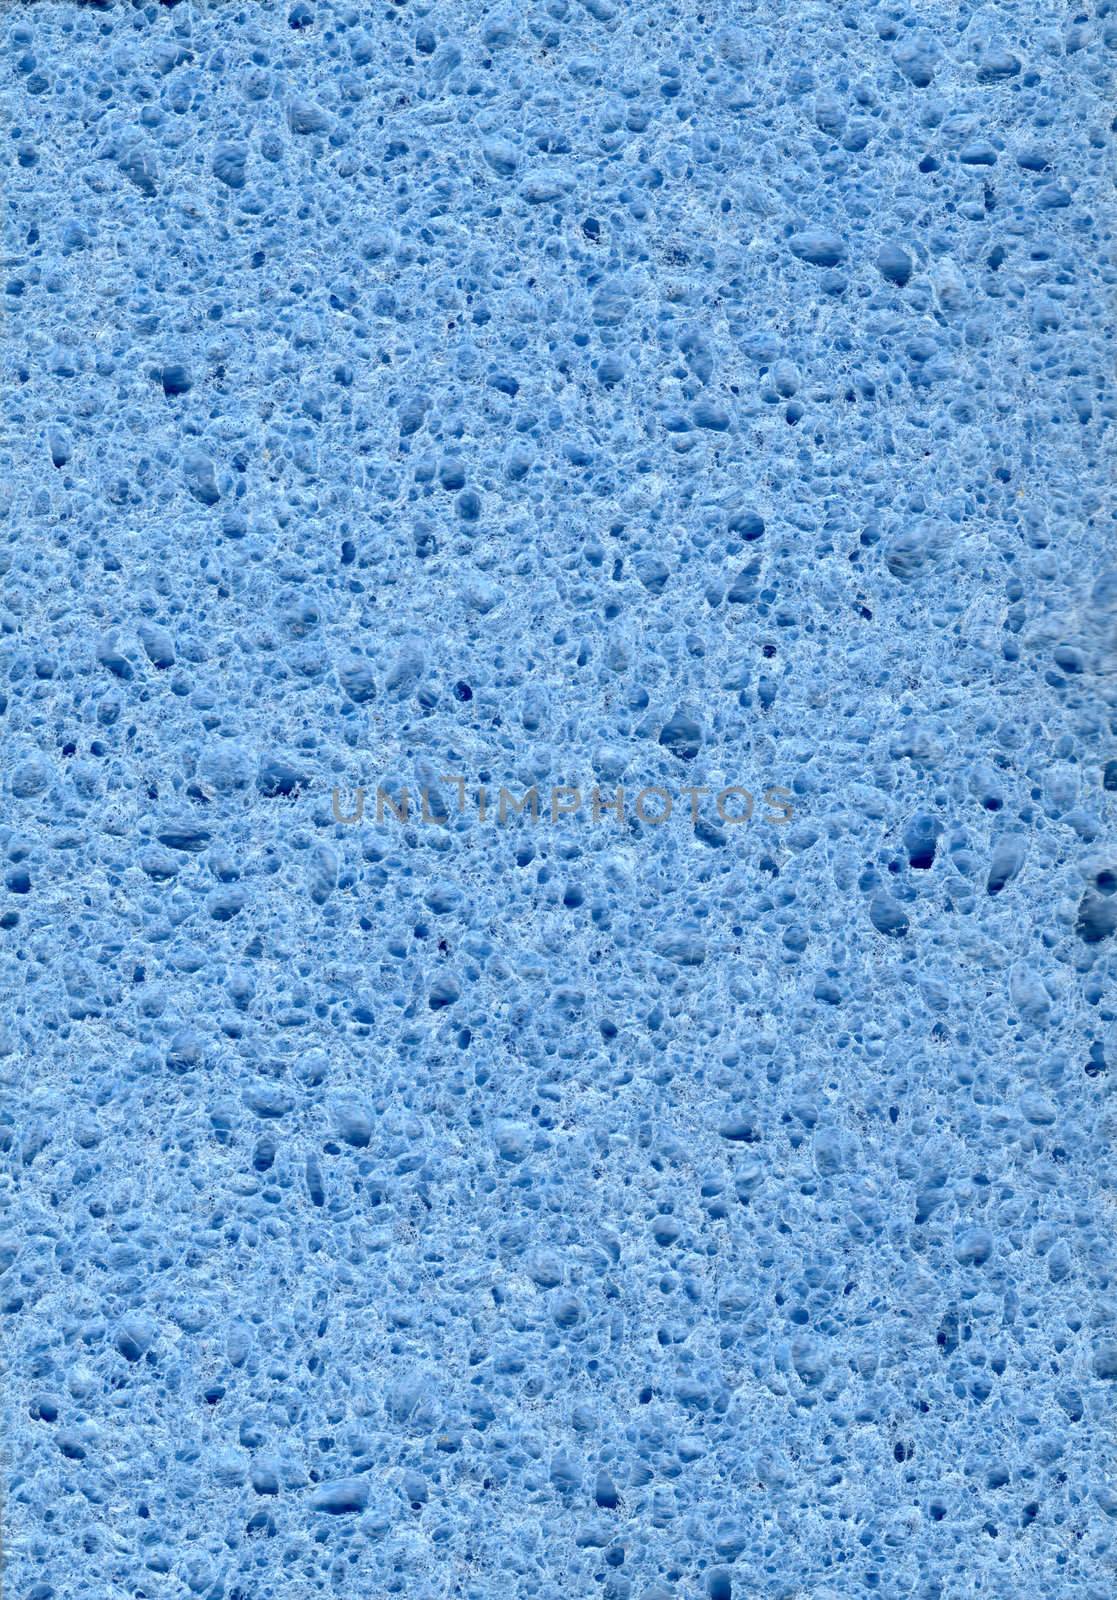 Blue Cellulose Sponge by d40xboy